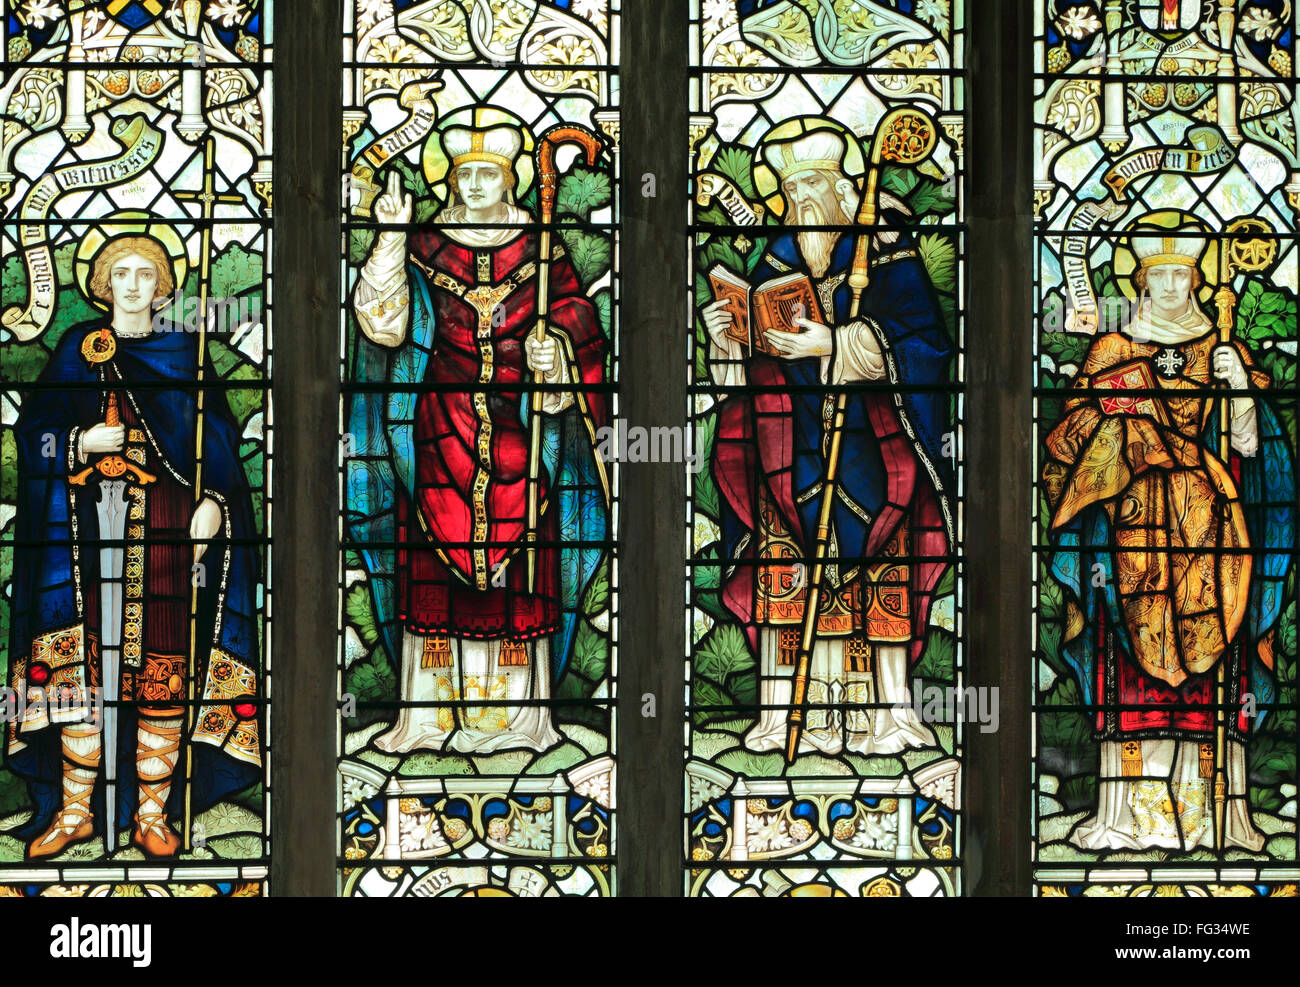 Saint Alban, Saint Patrick, saint David, saint Ninian, vitrail par J. Powell & fils, 1900, Blakeney, Norfolk, England, UK Banque D'Images